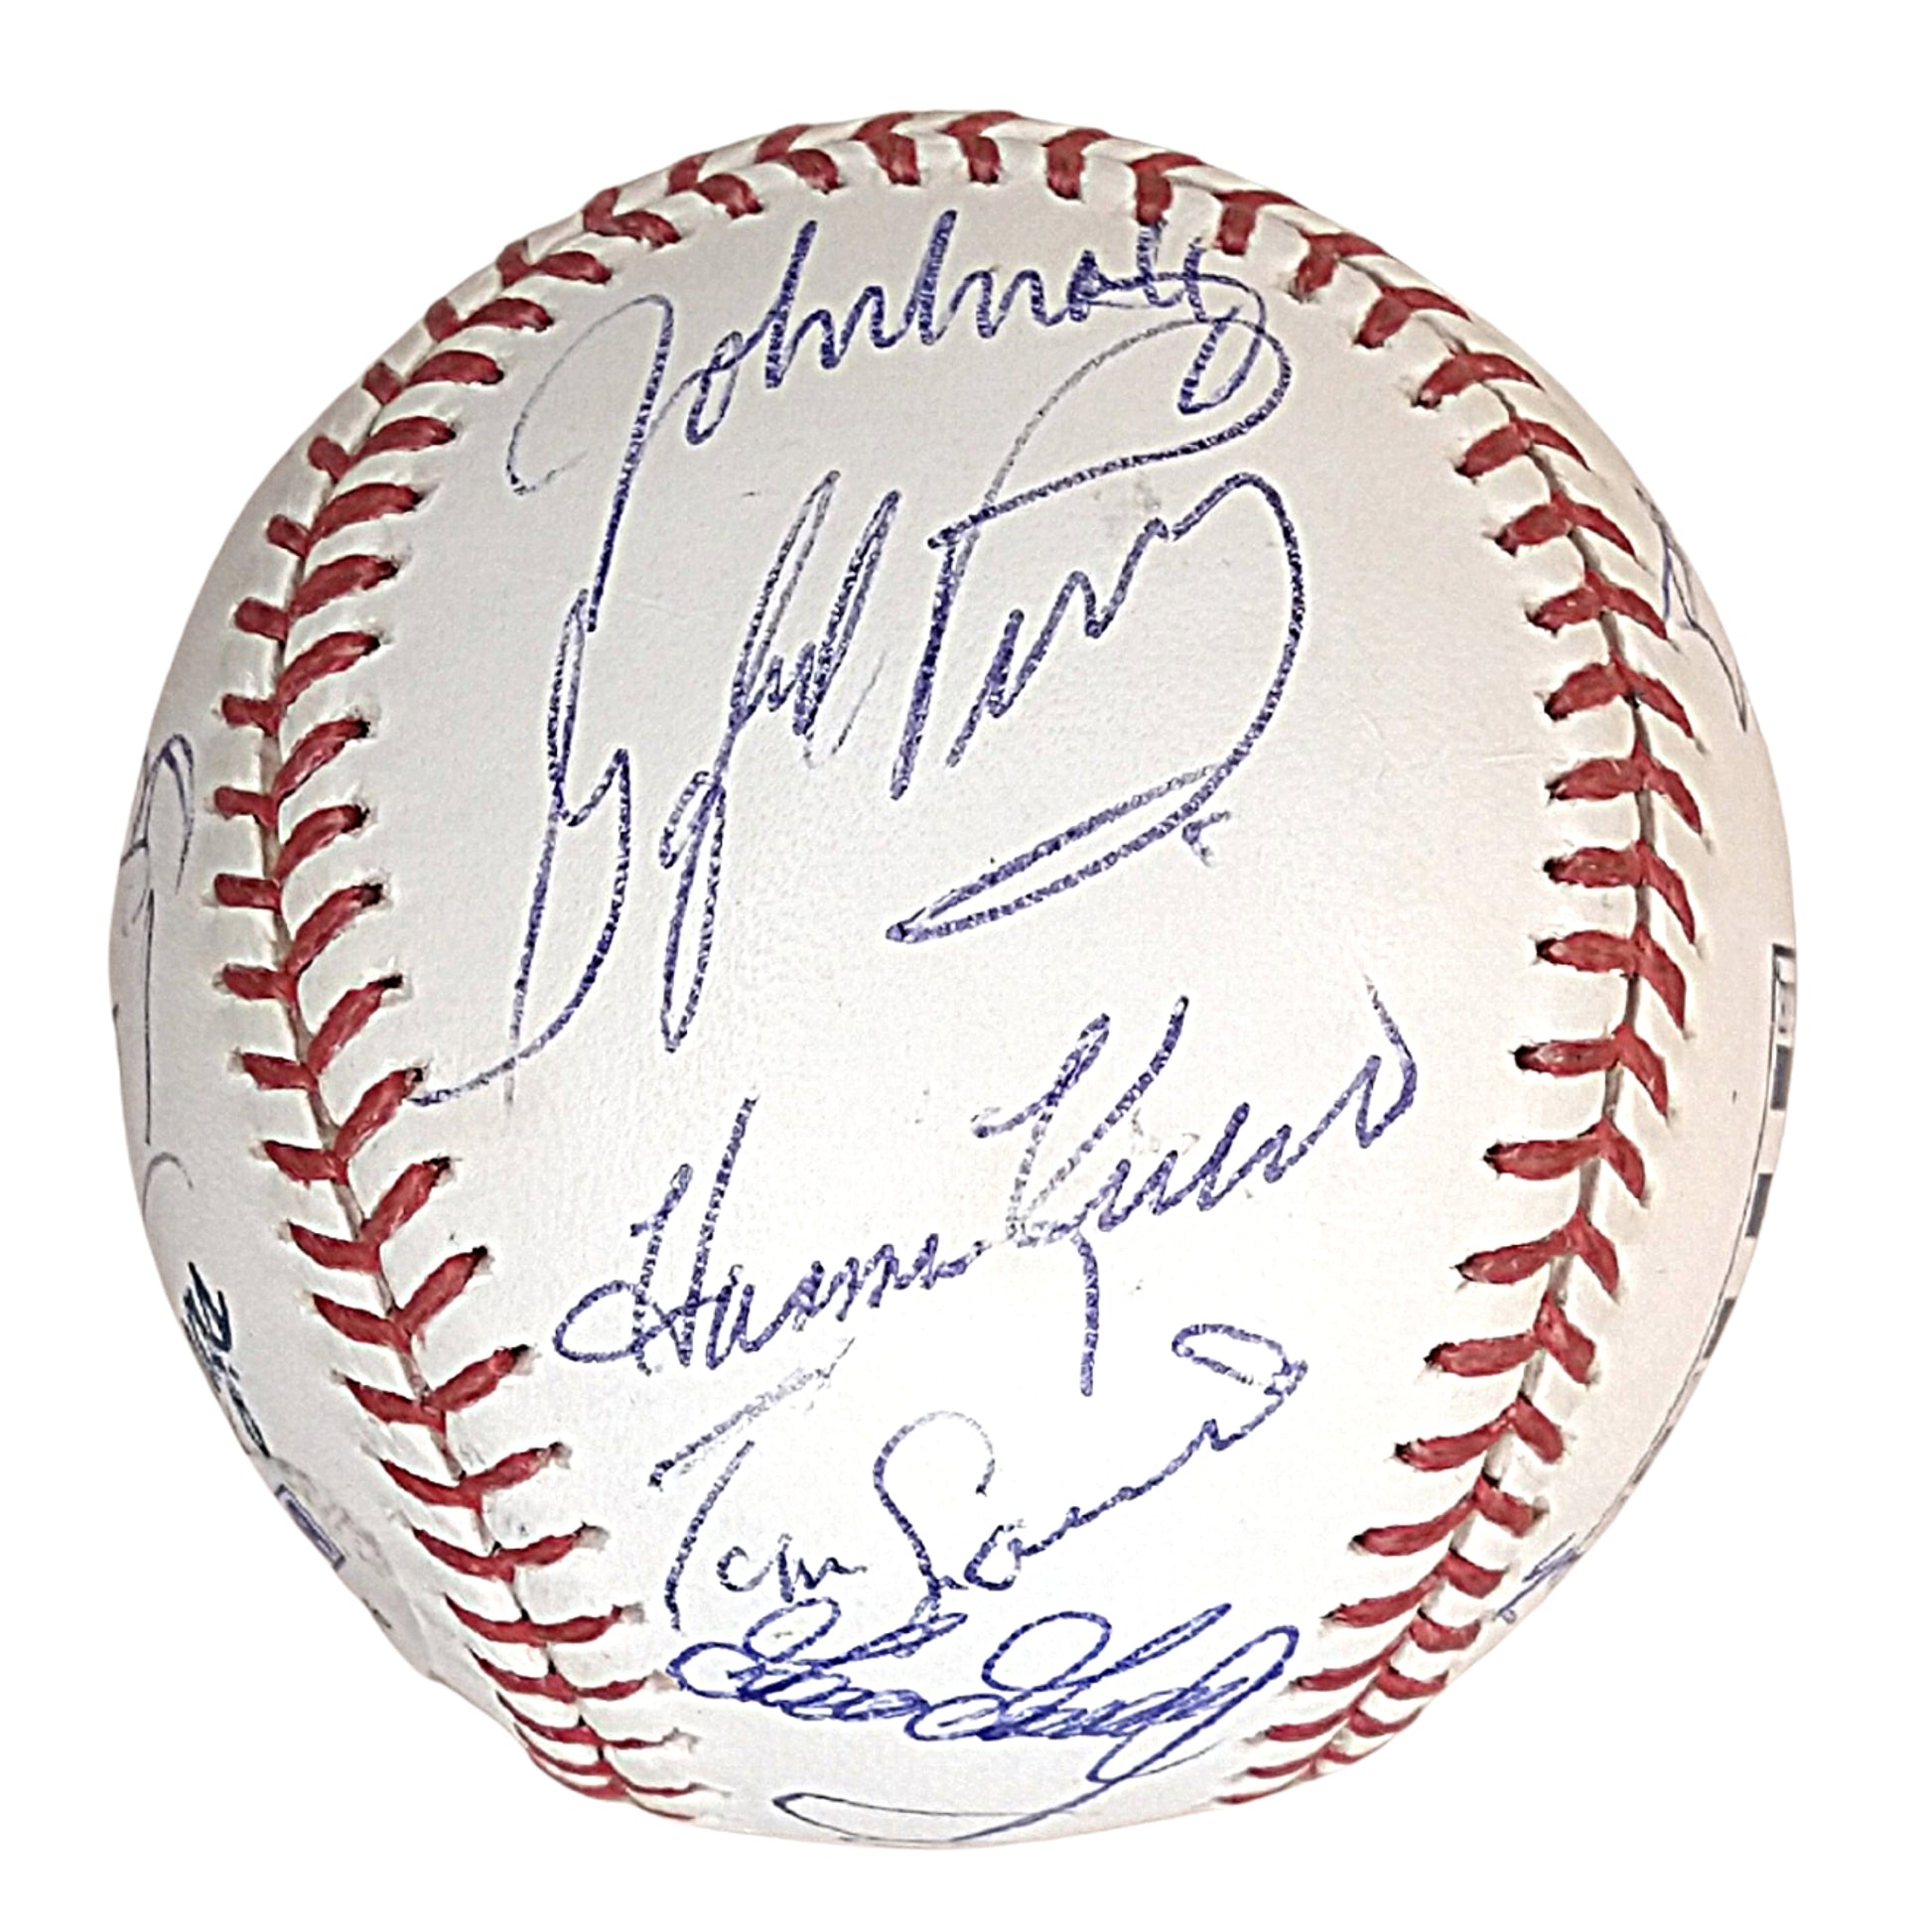 Greg Maddux Signed Autographed Chicago Cubs Baseball Jersey (PSA